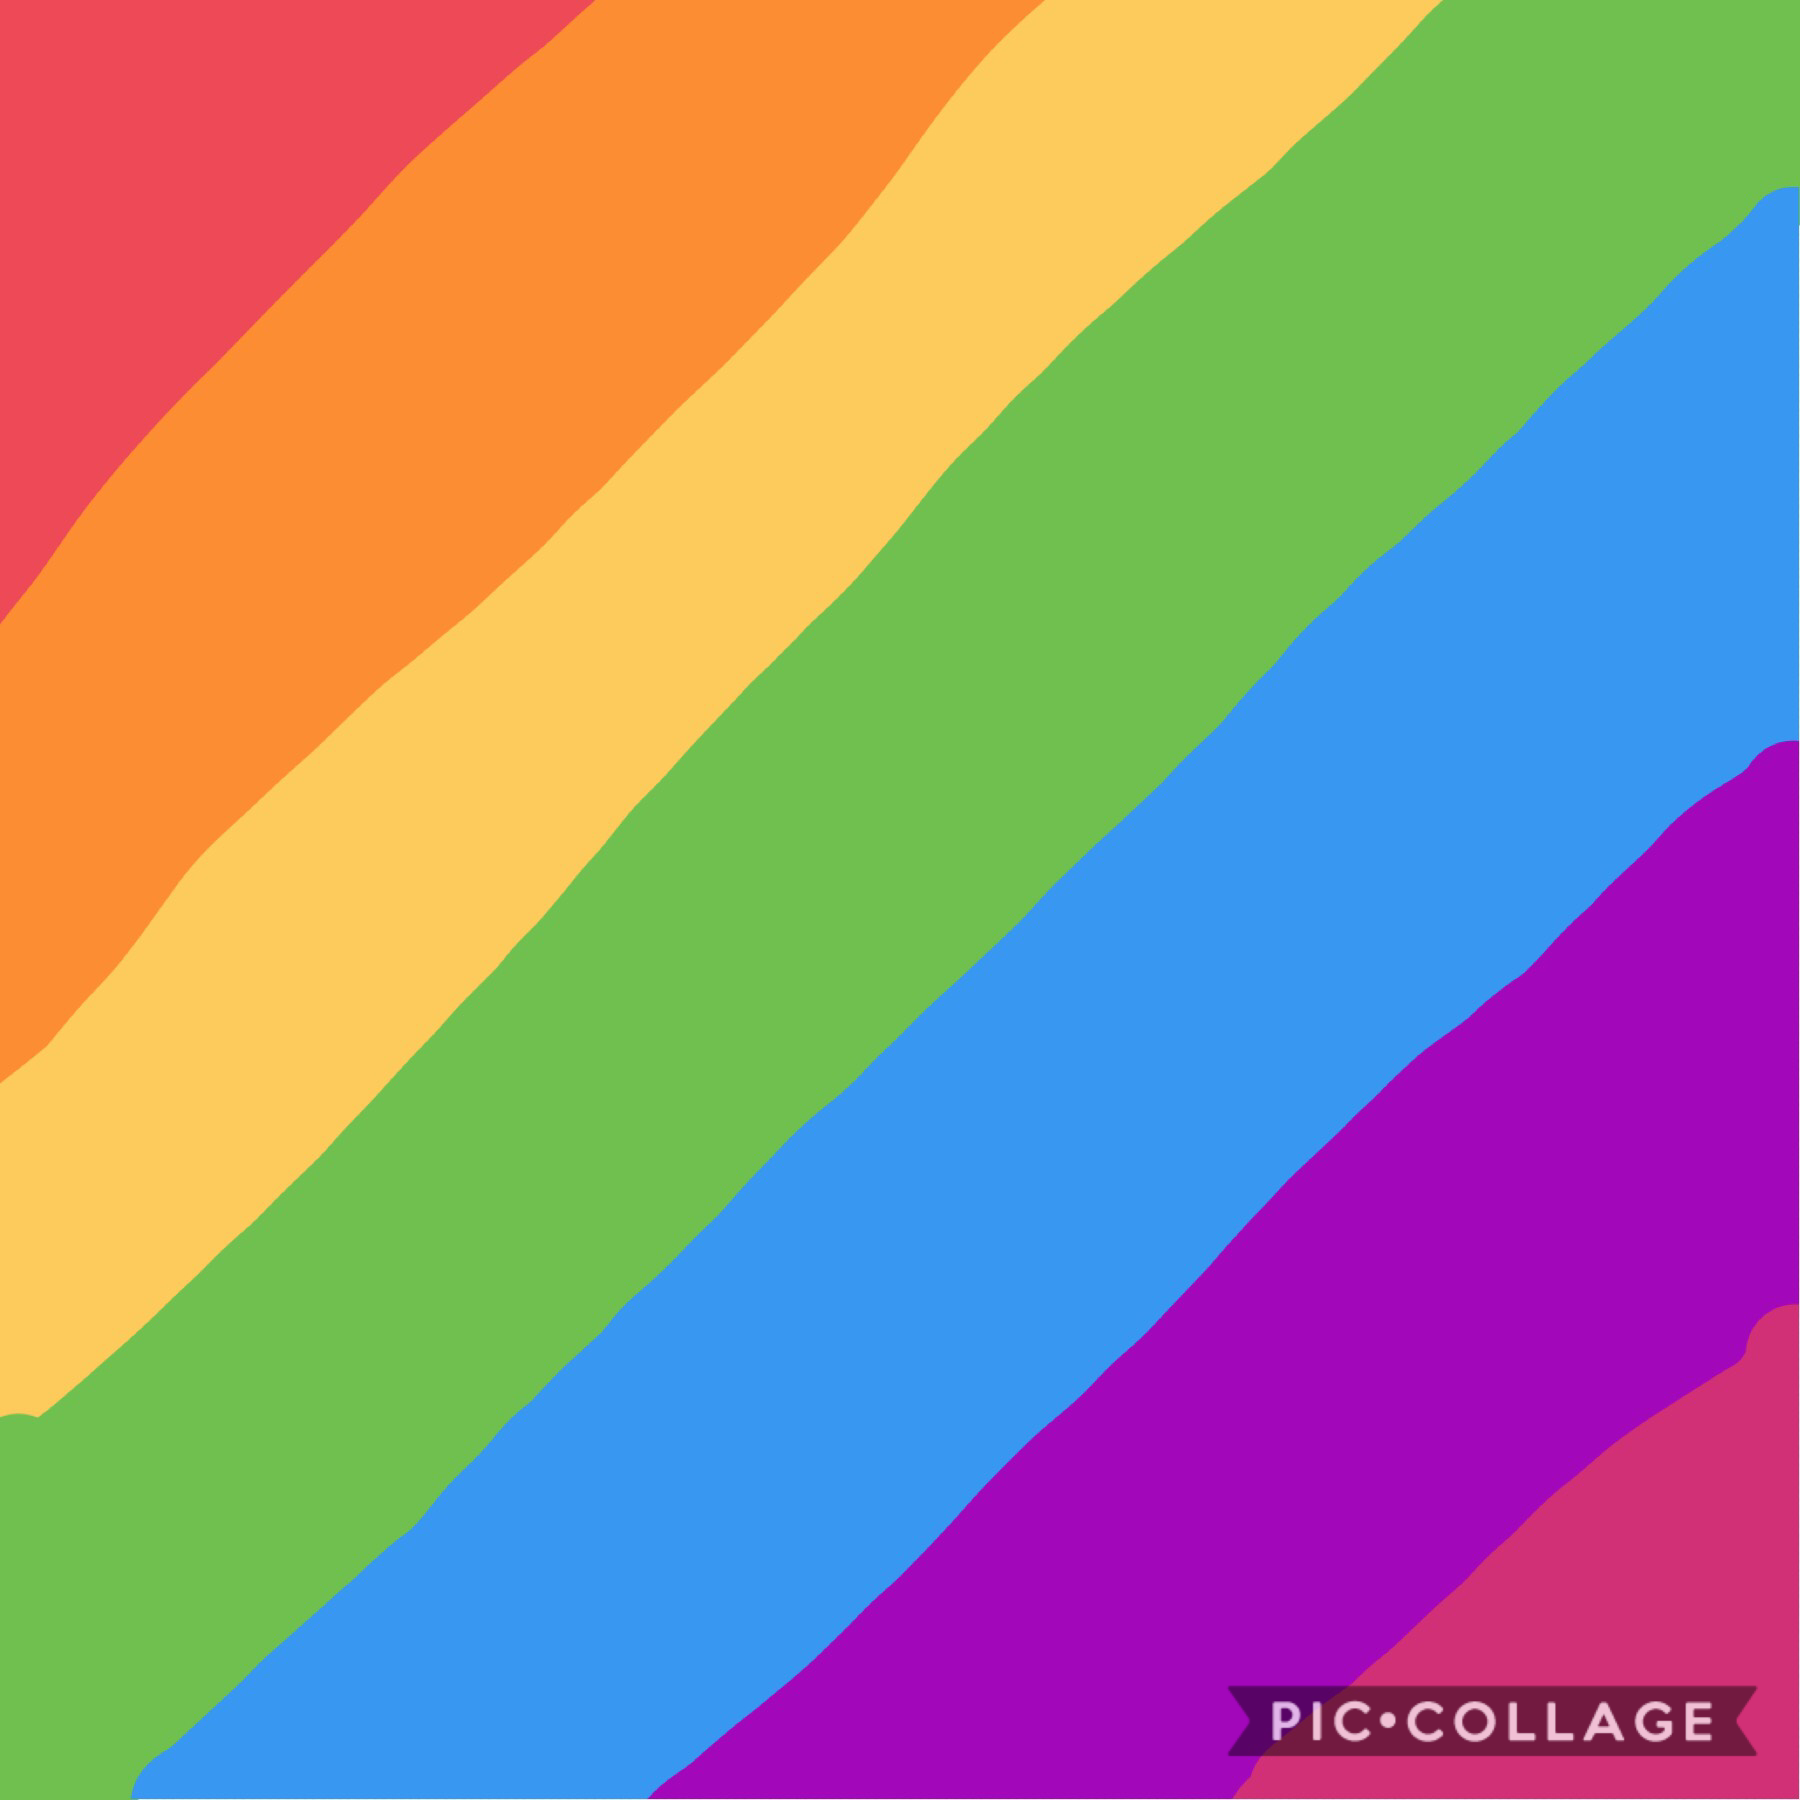 It’s rainbow!!! Happy thanks giving! Enjoy